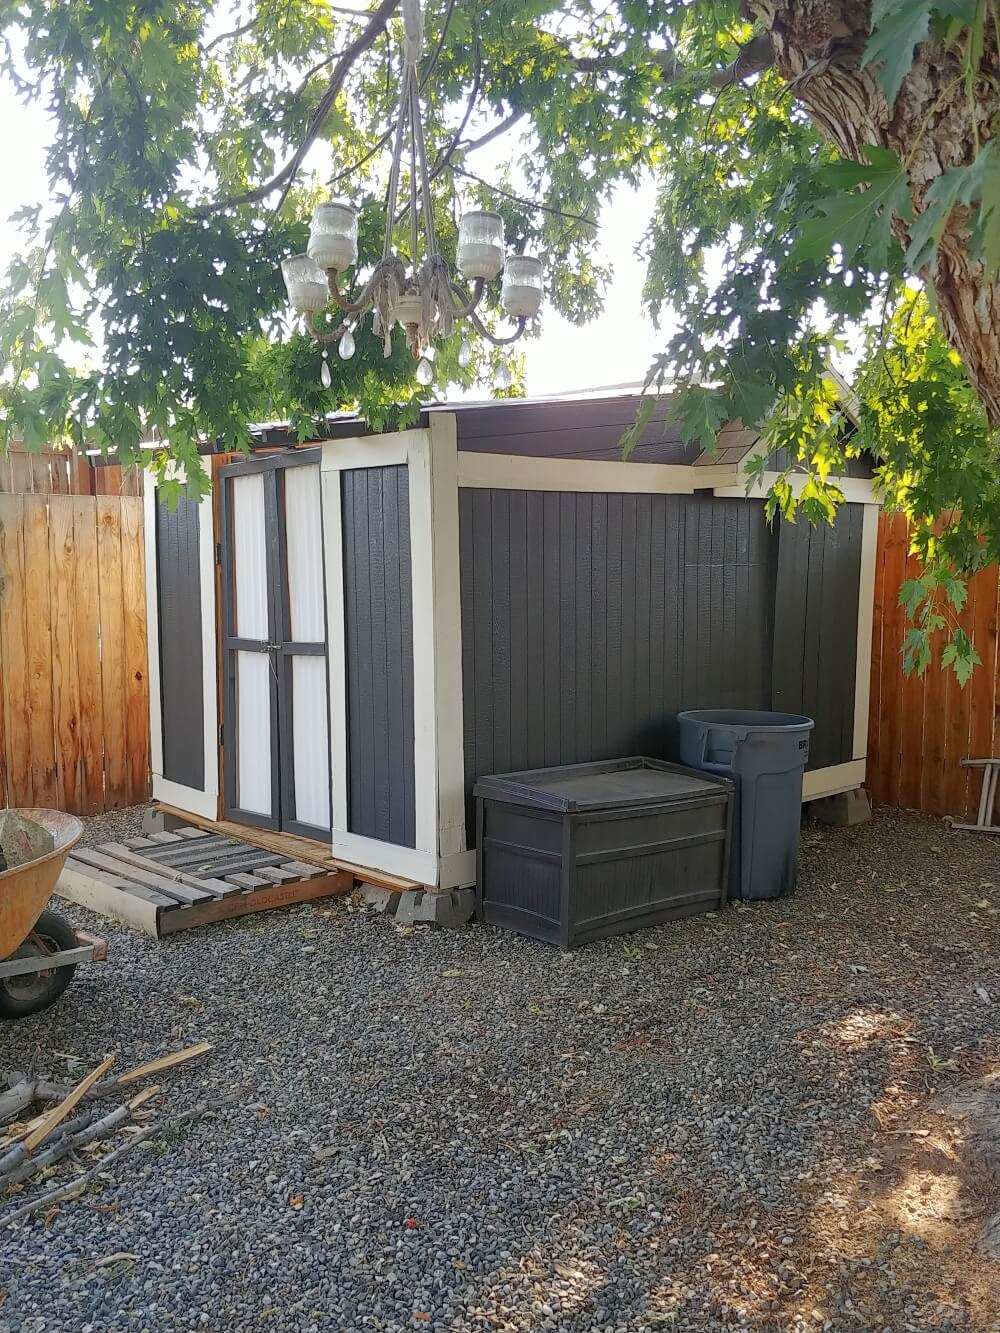 Building a Backyard Shed - Former Wood Storage Area